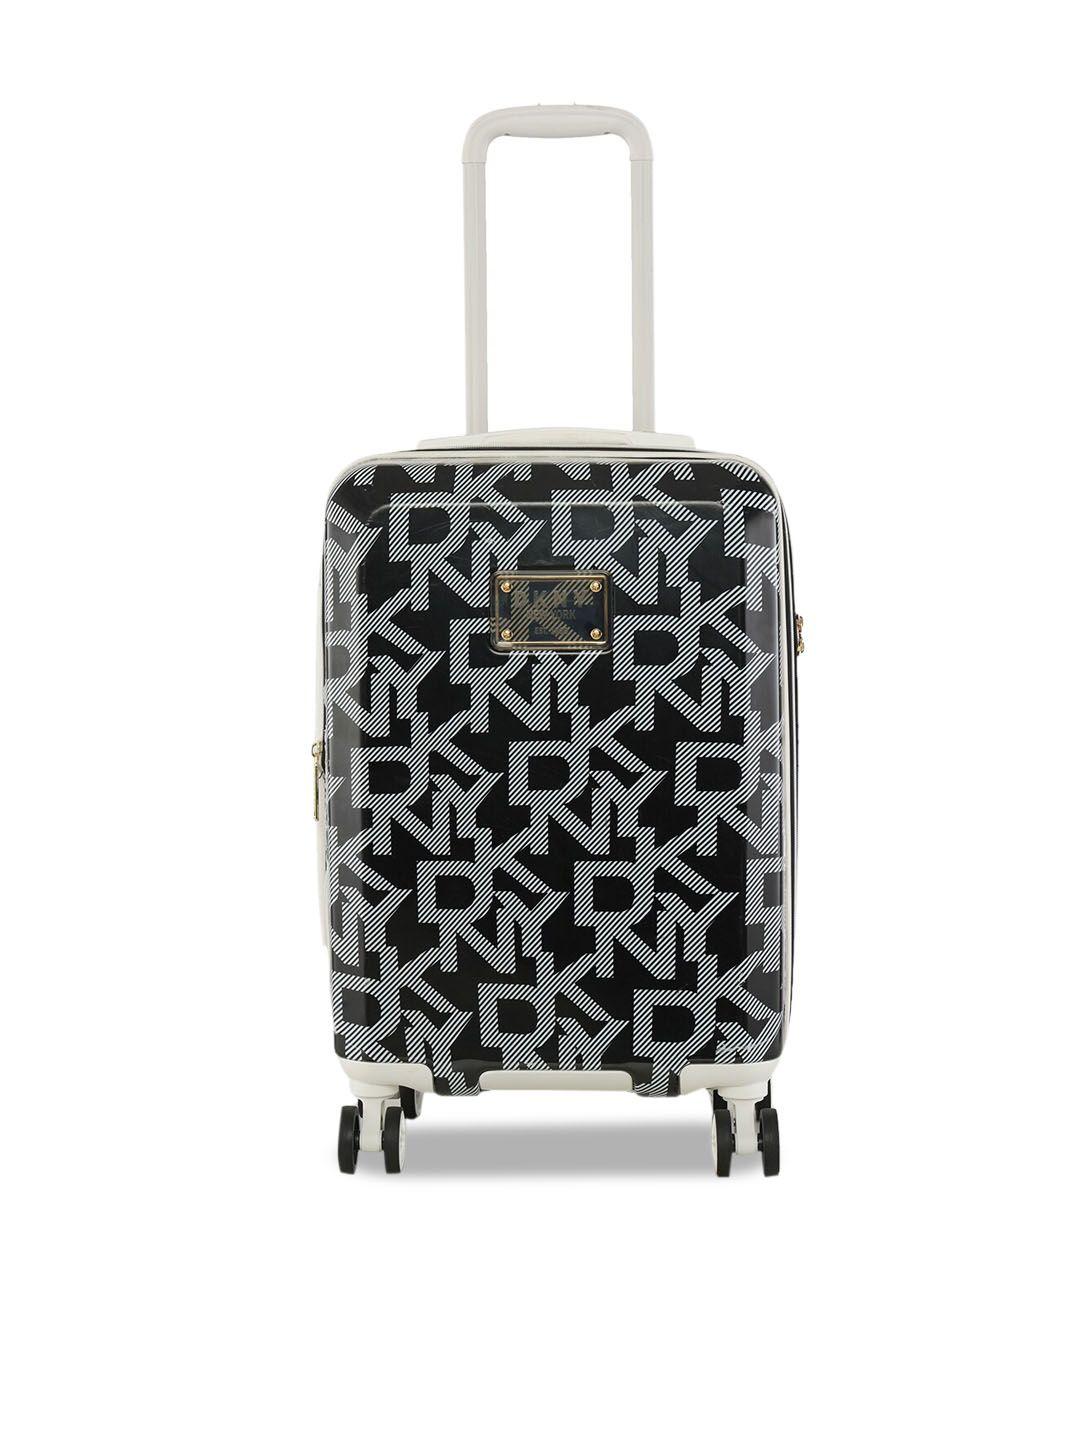 dkny signature hardside range black & white color hard case abs pc film cabin size luggage